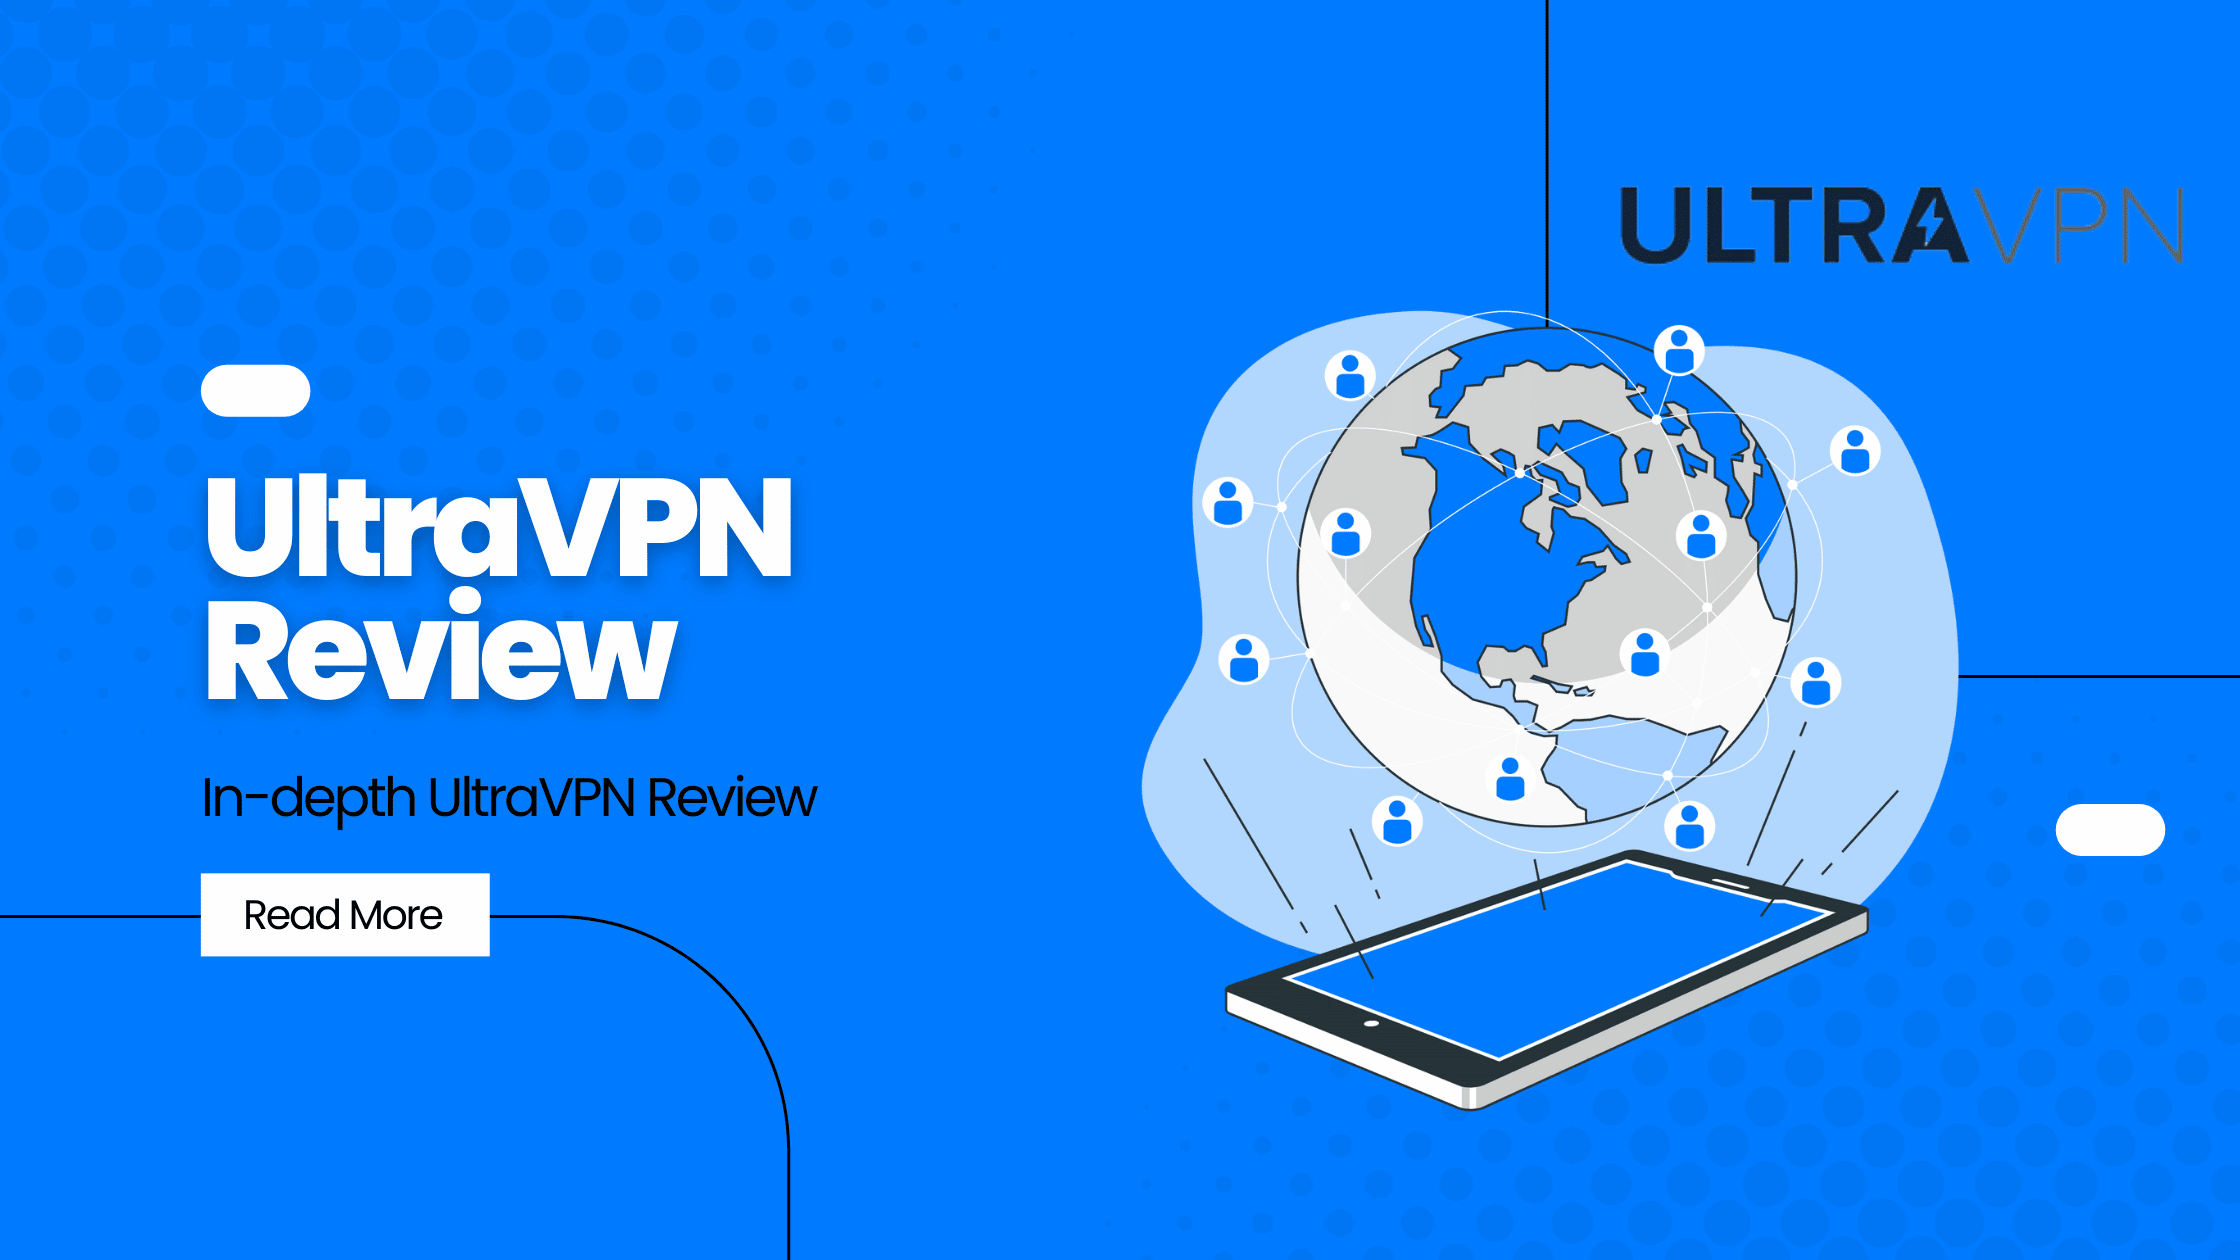 UltraVPN Review